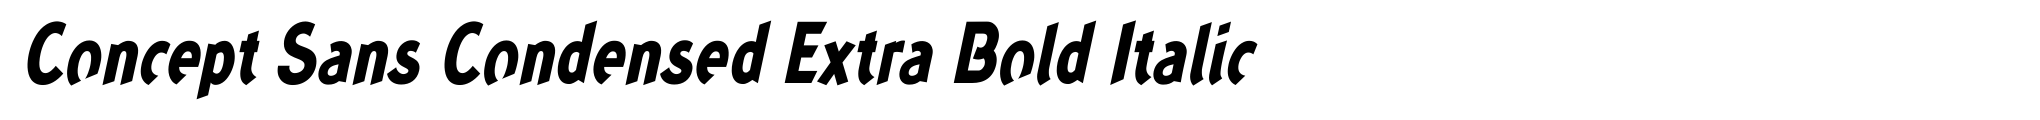 Concept Sans Condensed Extra Bold Italic image